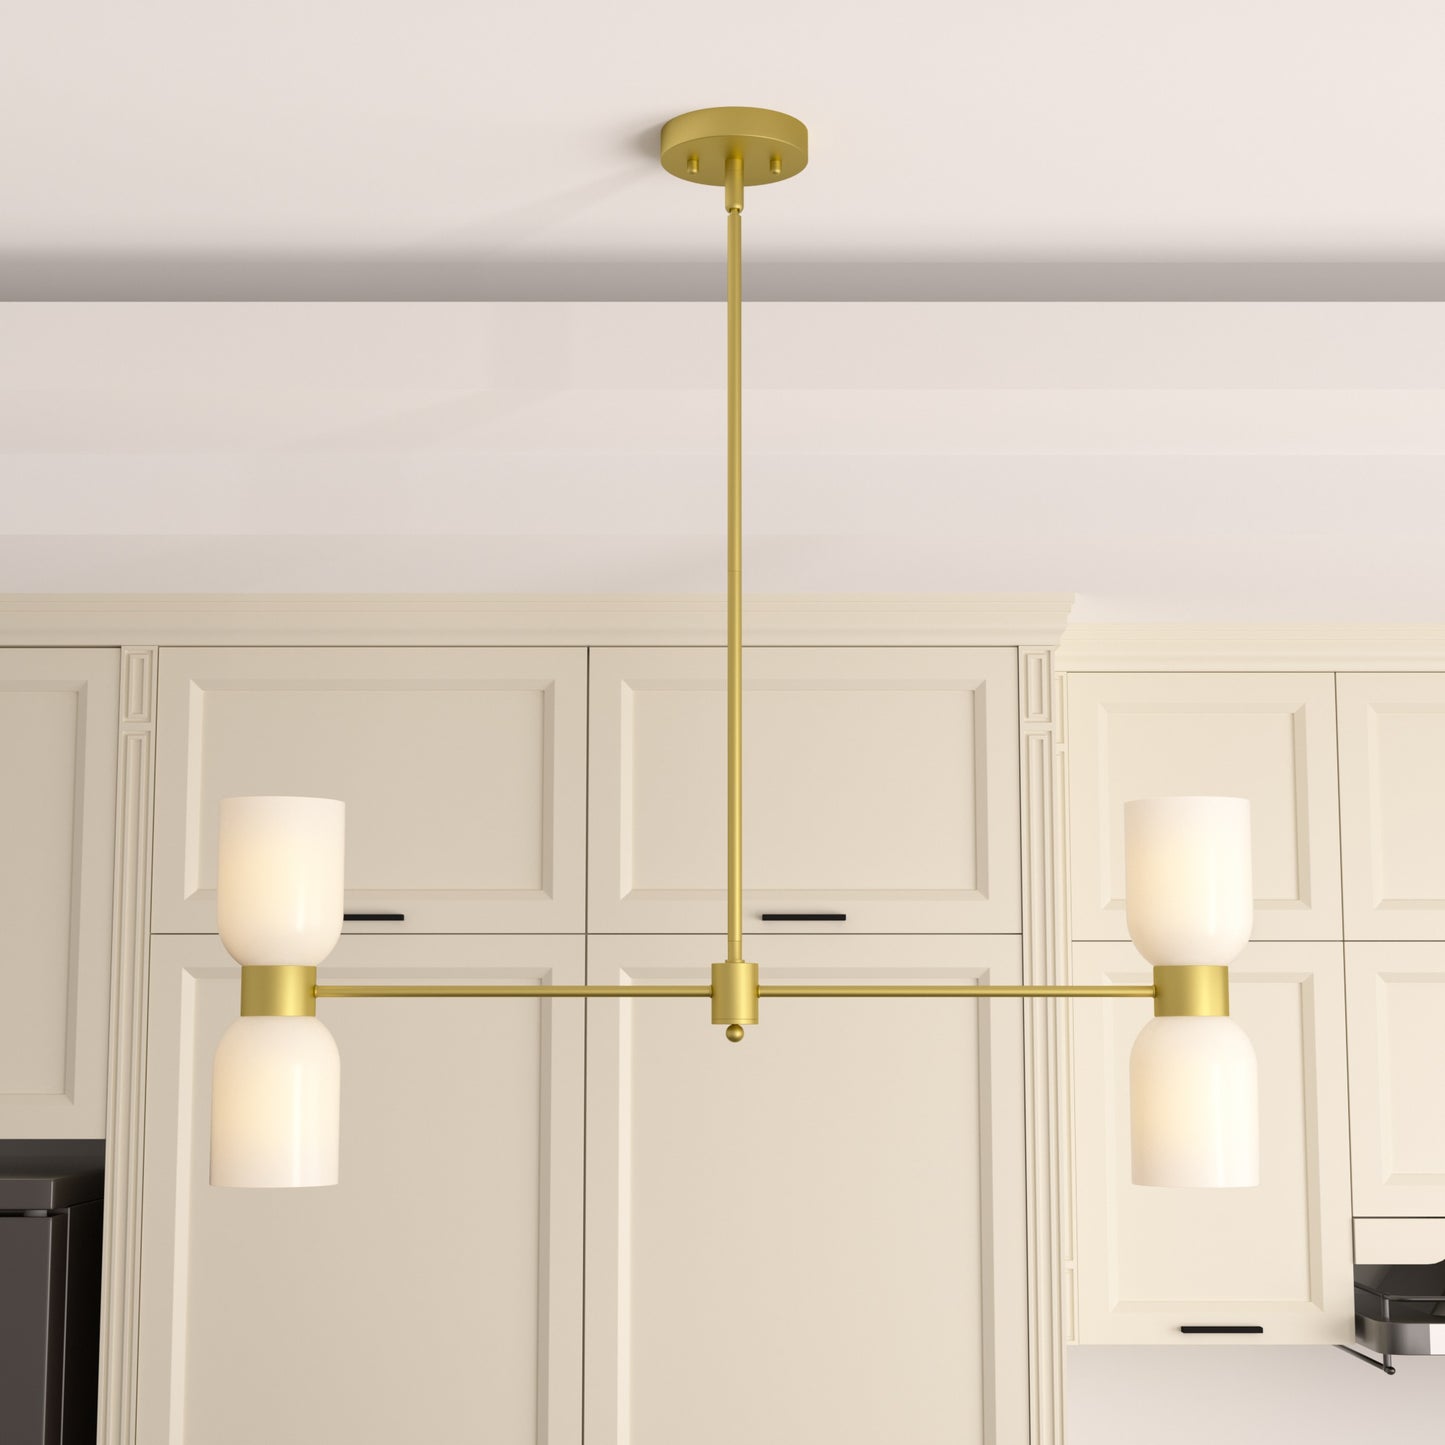 4 light modern linear chandelier (9) by ACROMA